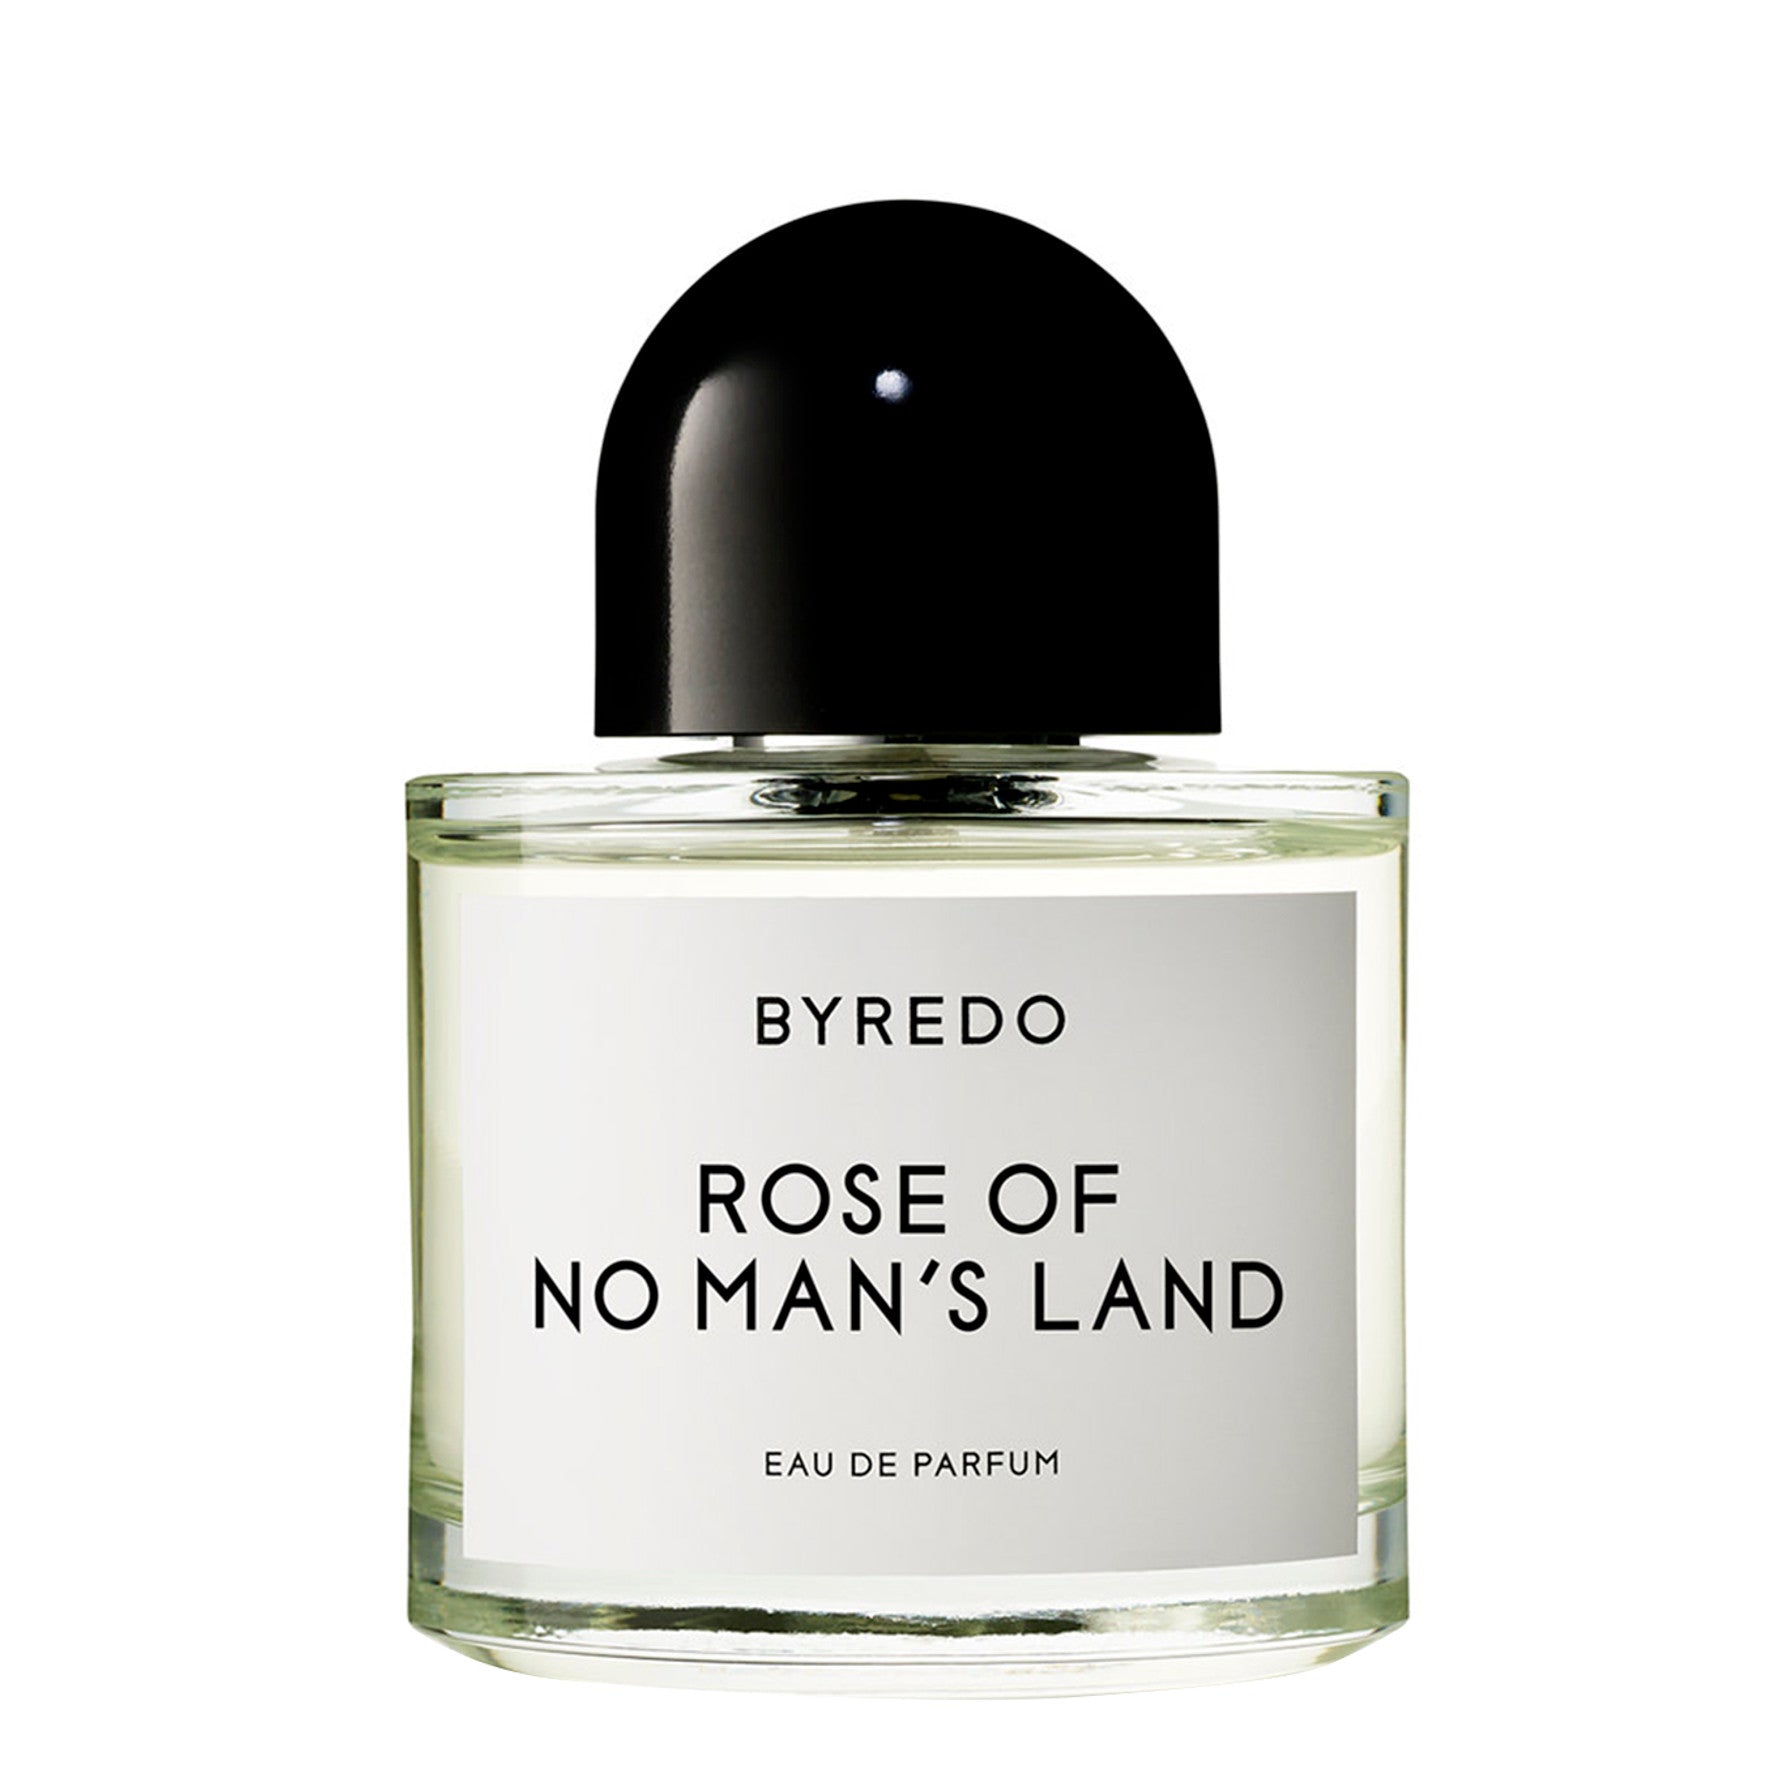 Byredo - “Rose of No Man’s Land” Eau de Parfum 100ml view 1